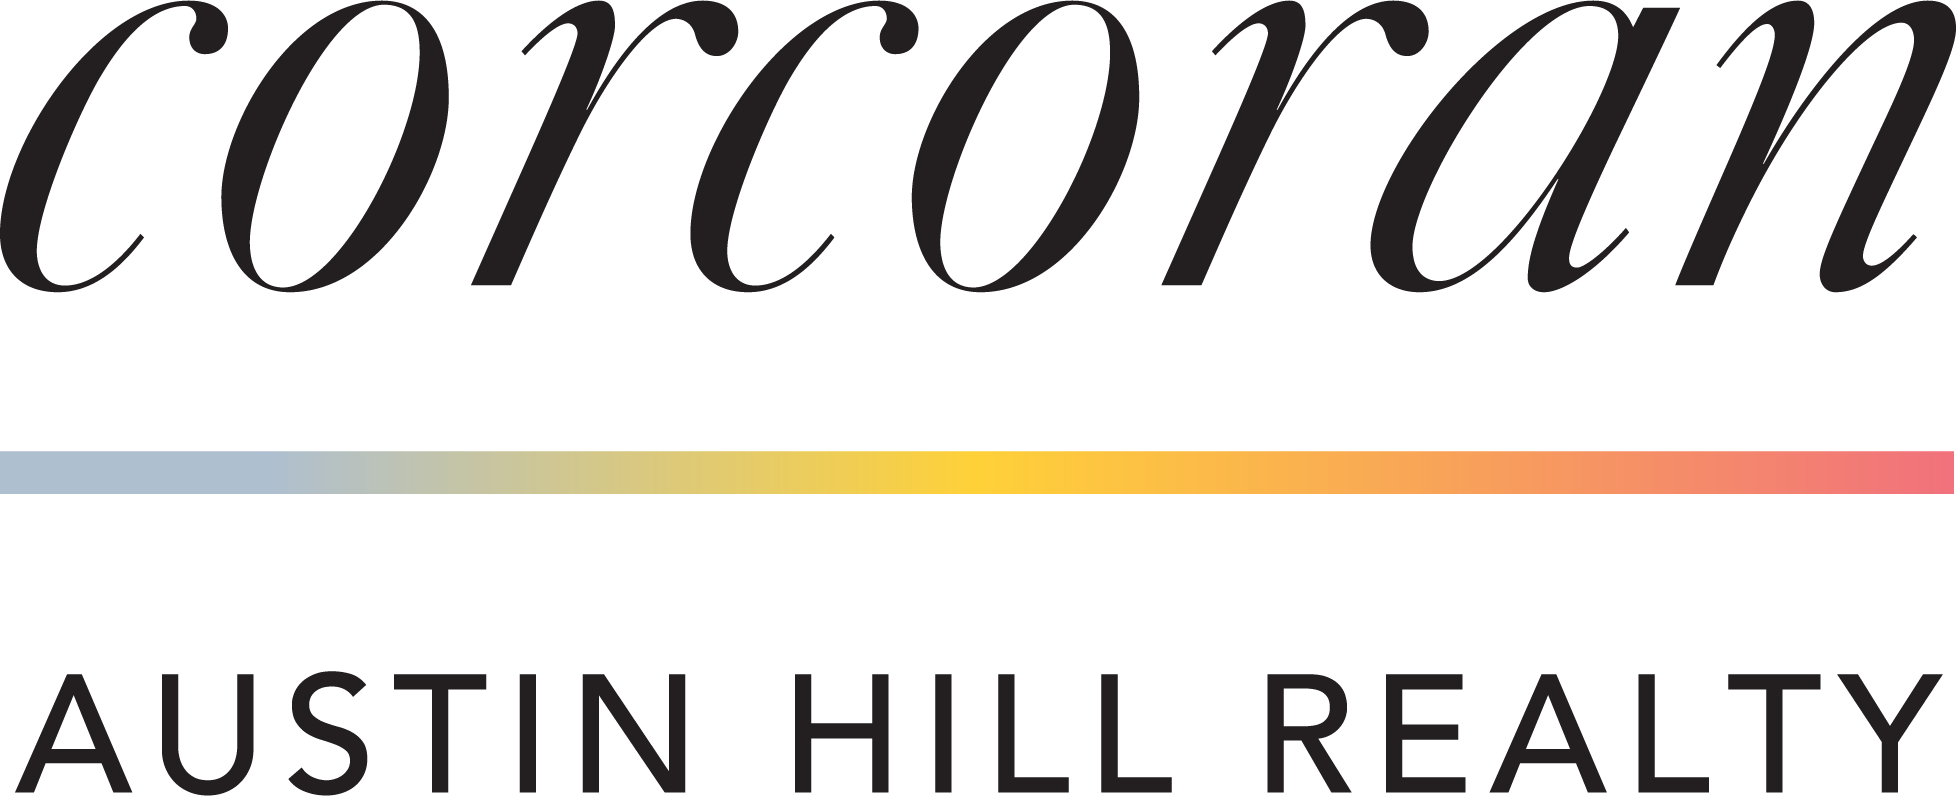 Corcoran Austin Hill Realty logo